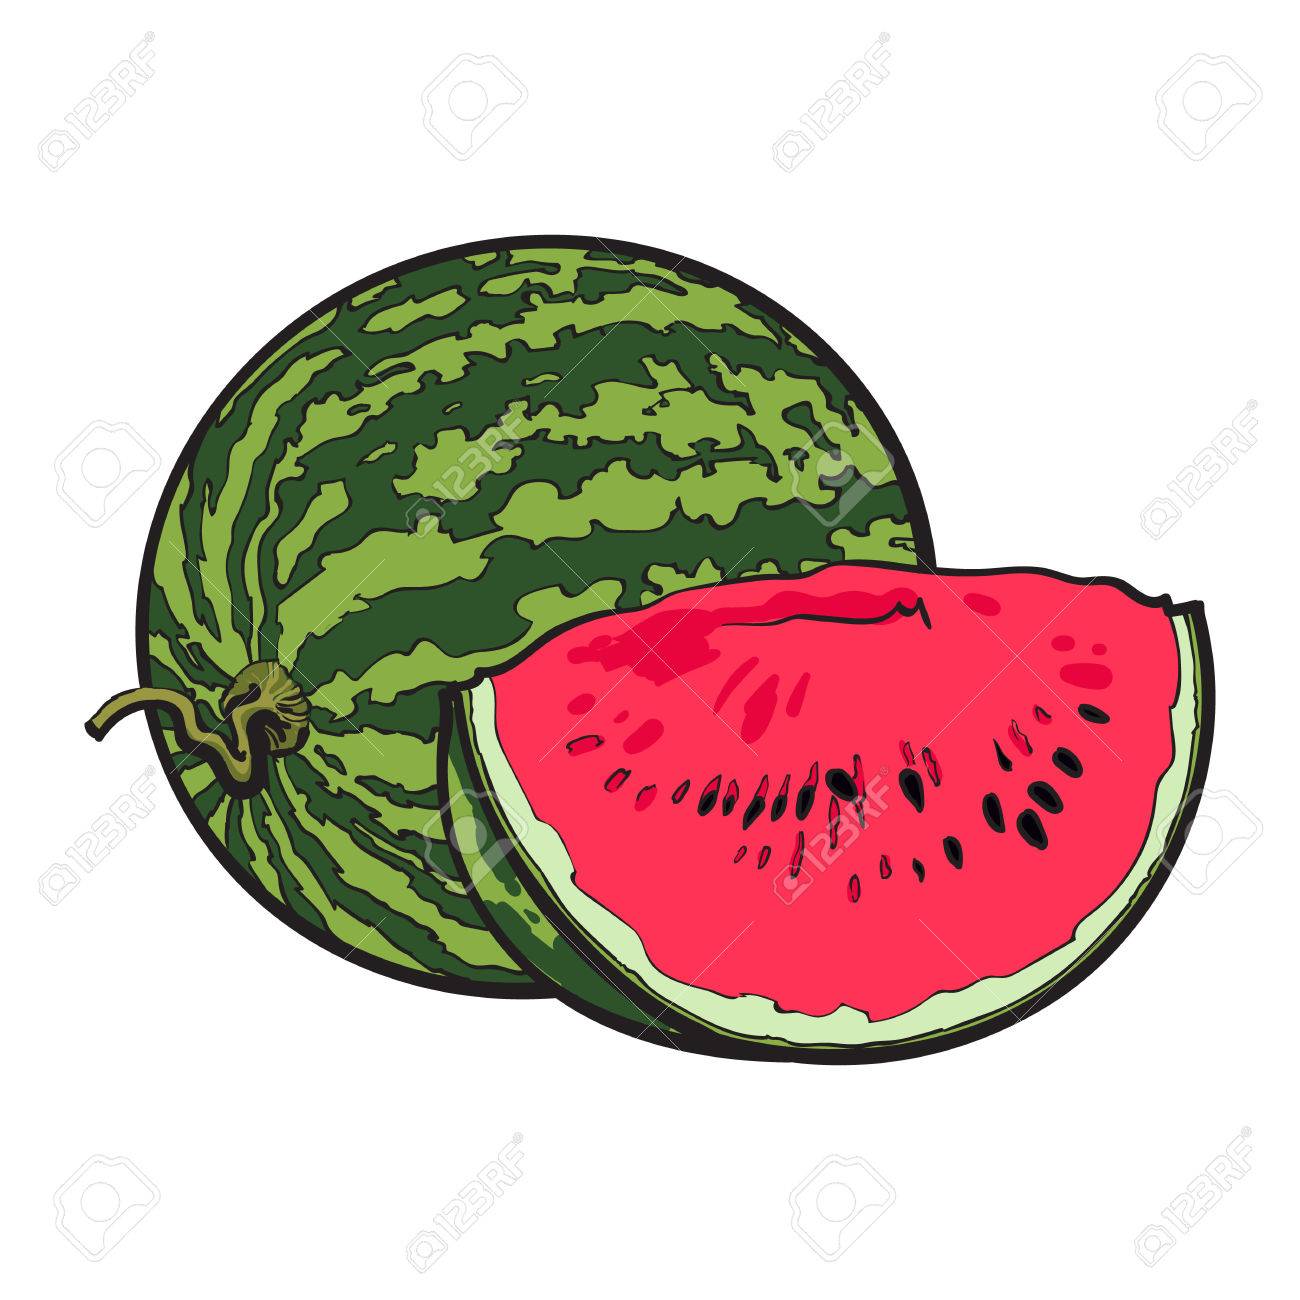 Watermelon Drawing at GetDrawings | Free download